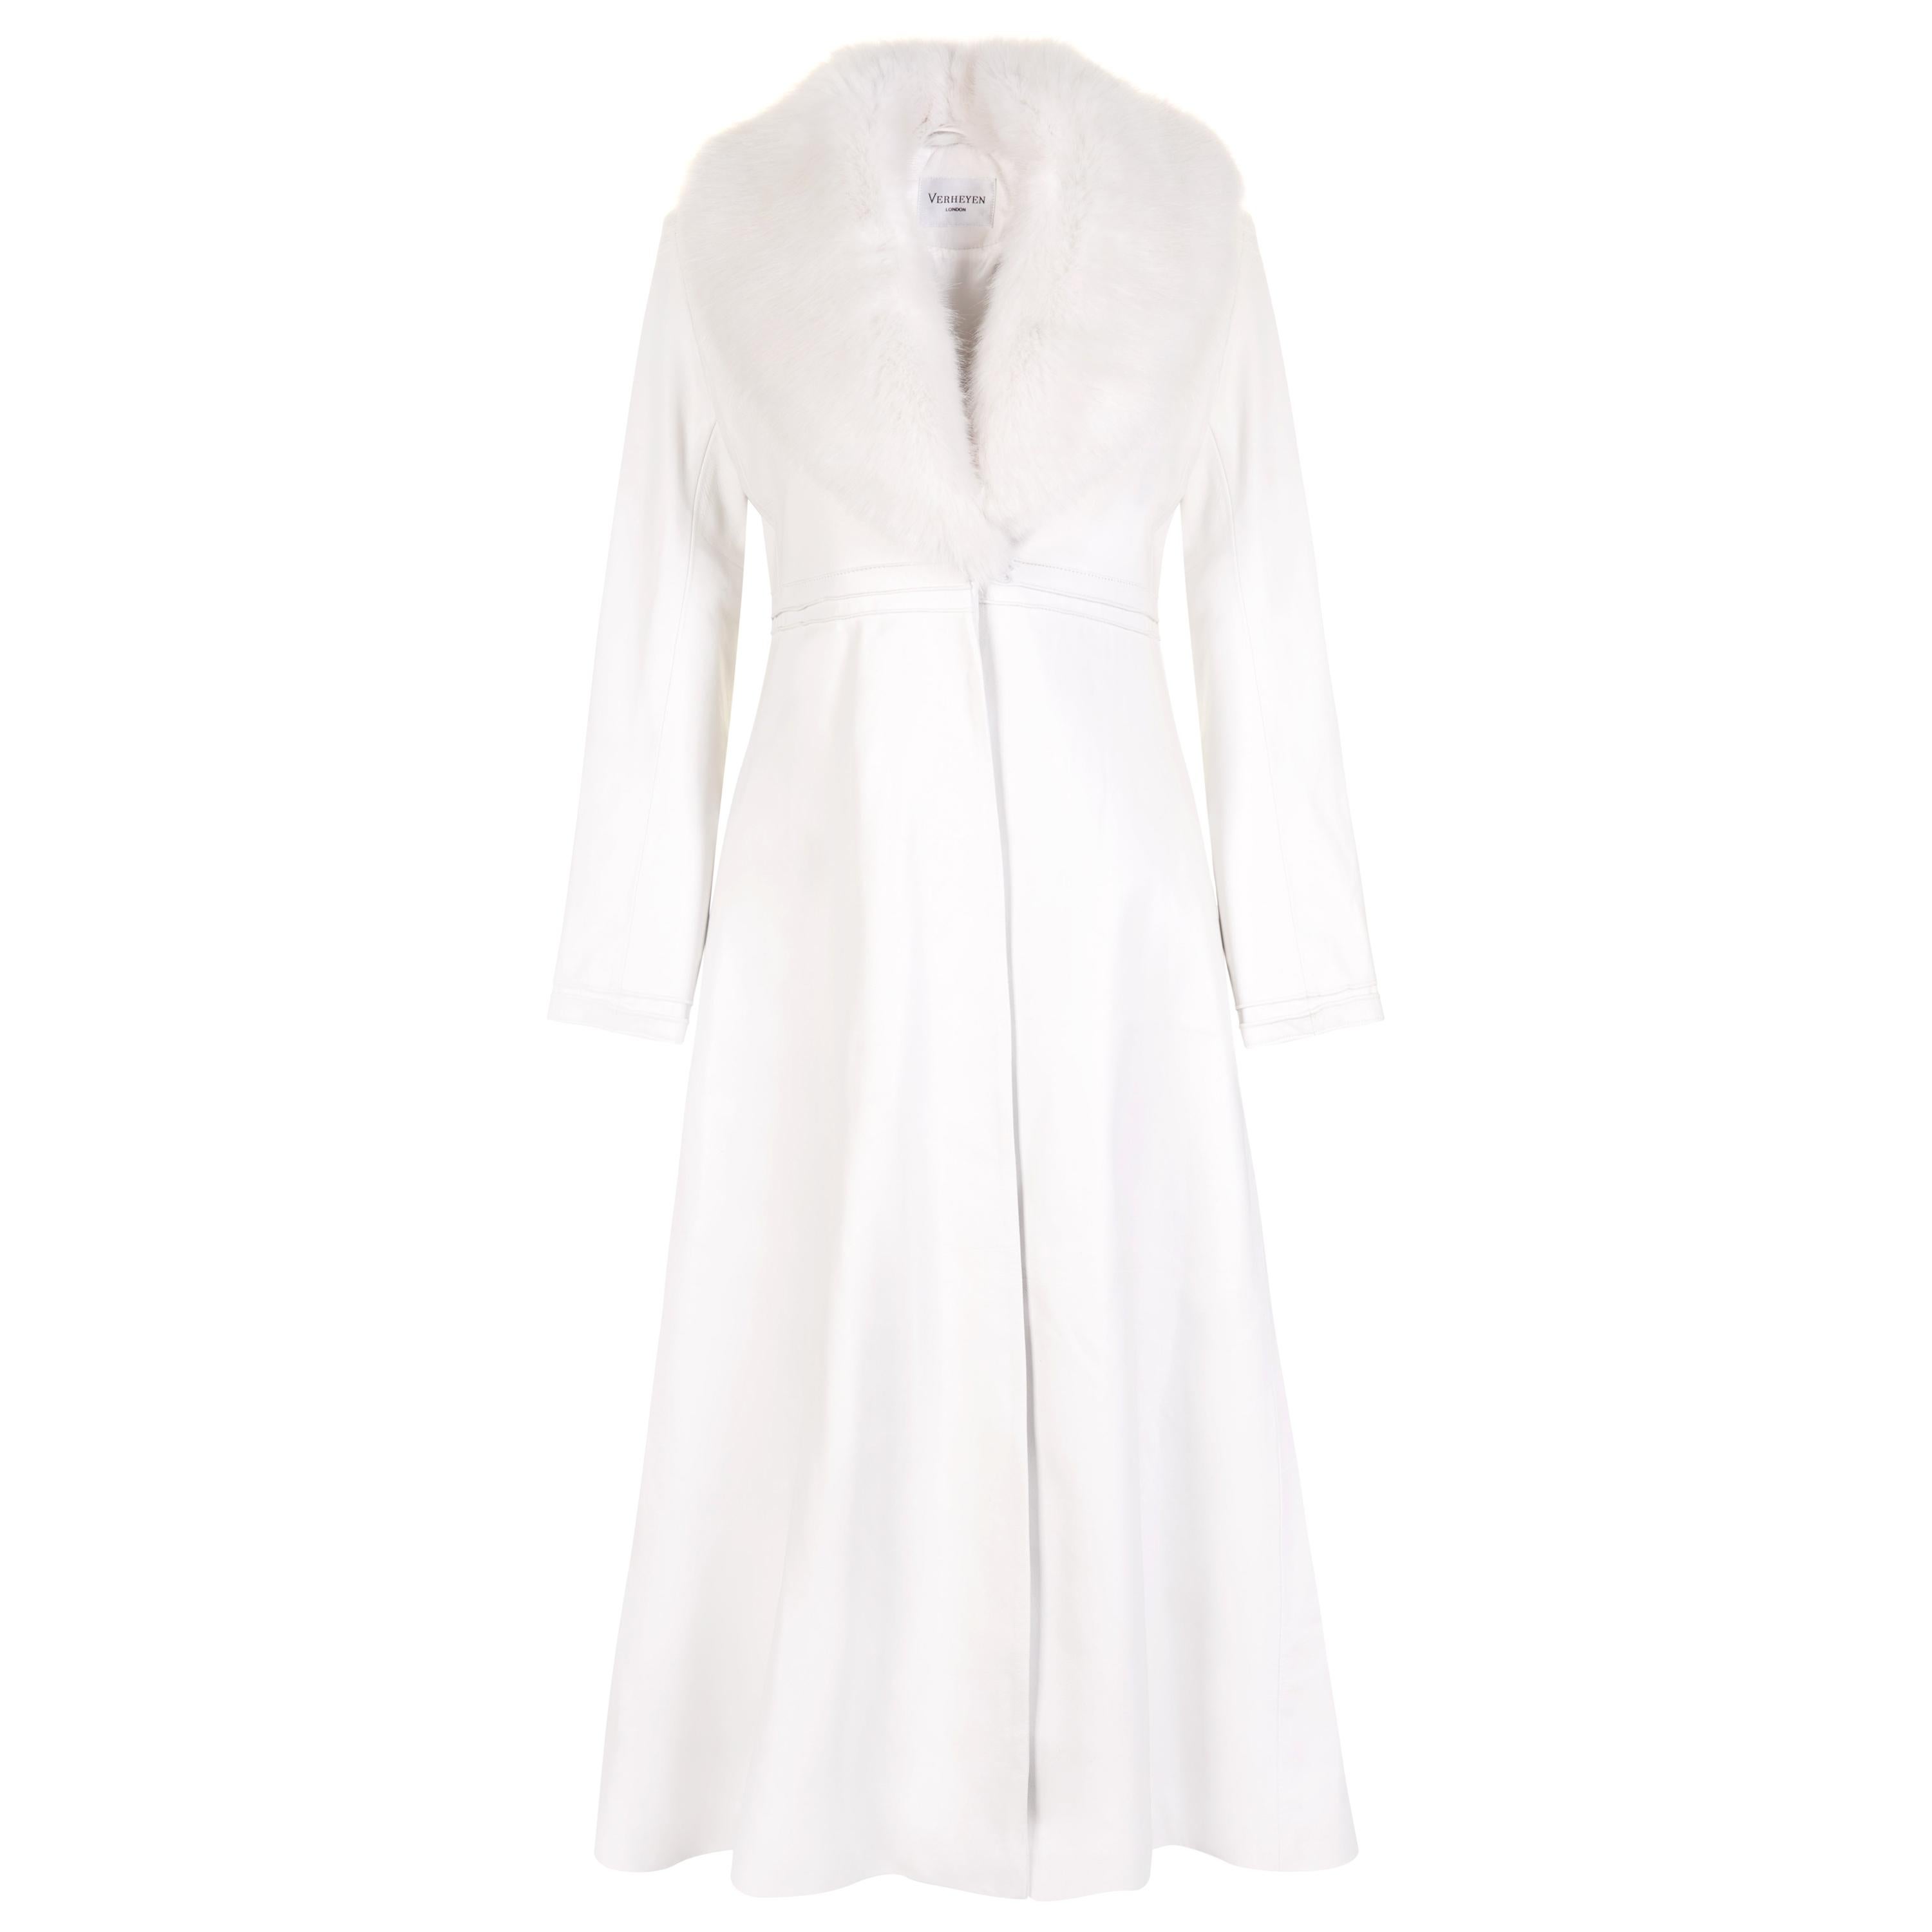 Verheyen London Edward Leather Coat in White with Faux Fur - Size uk 6  For Sale